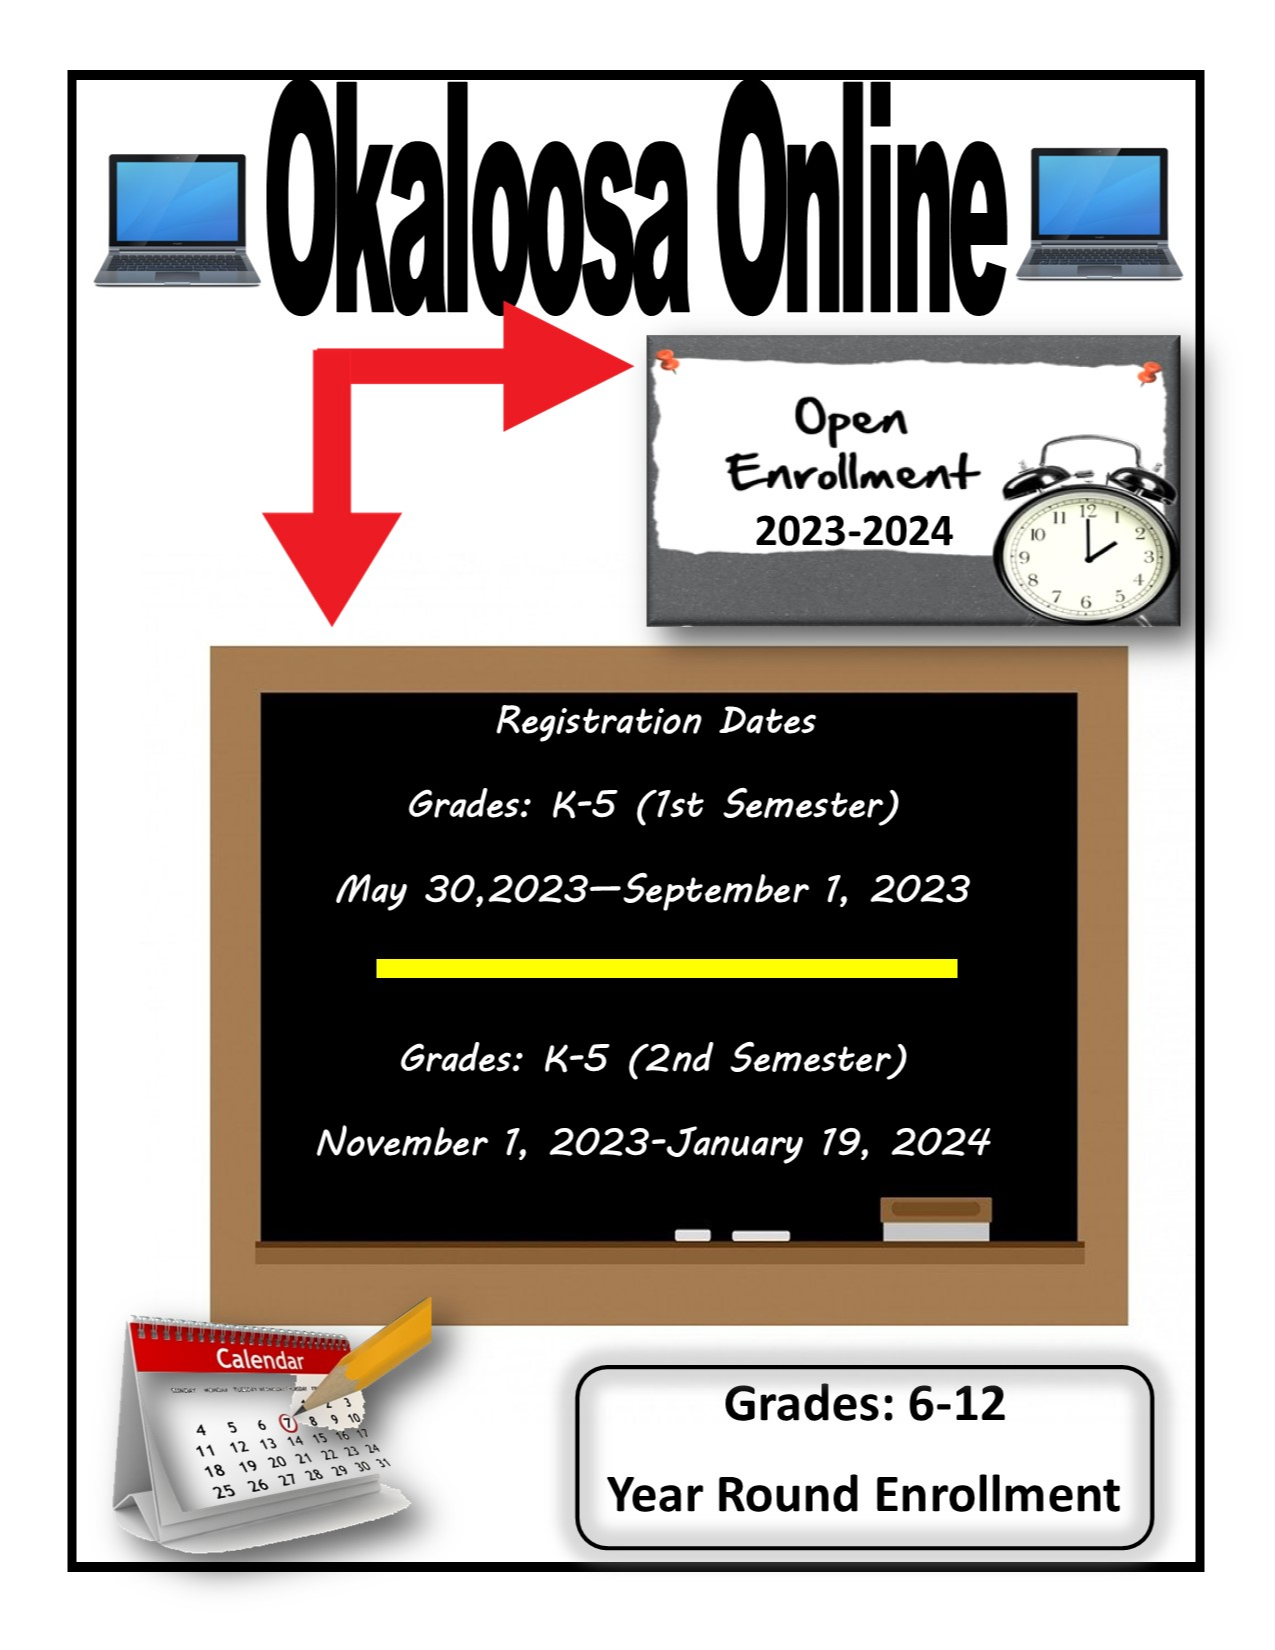 Open Enrollment 2023-24 registration dates